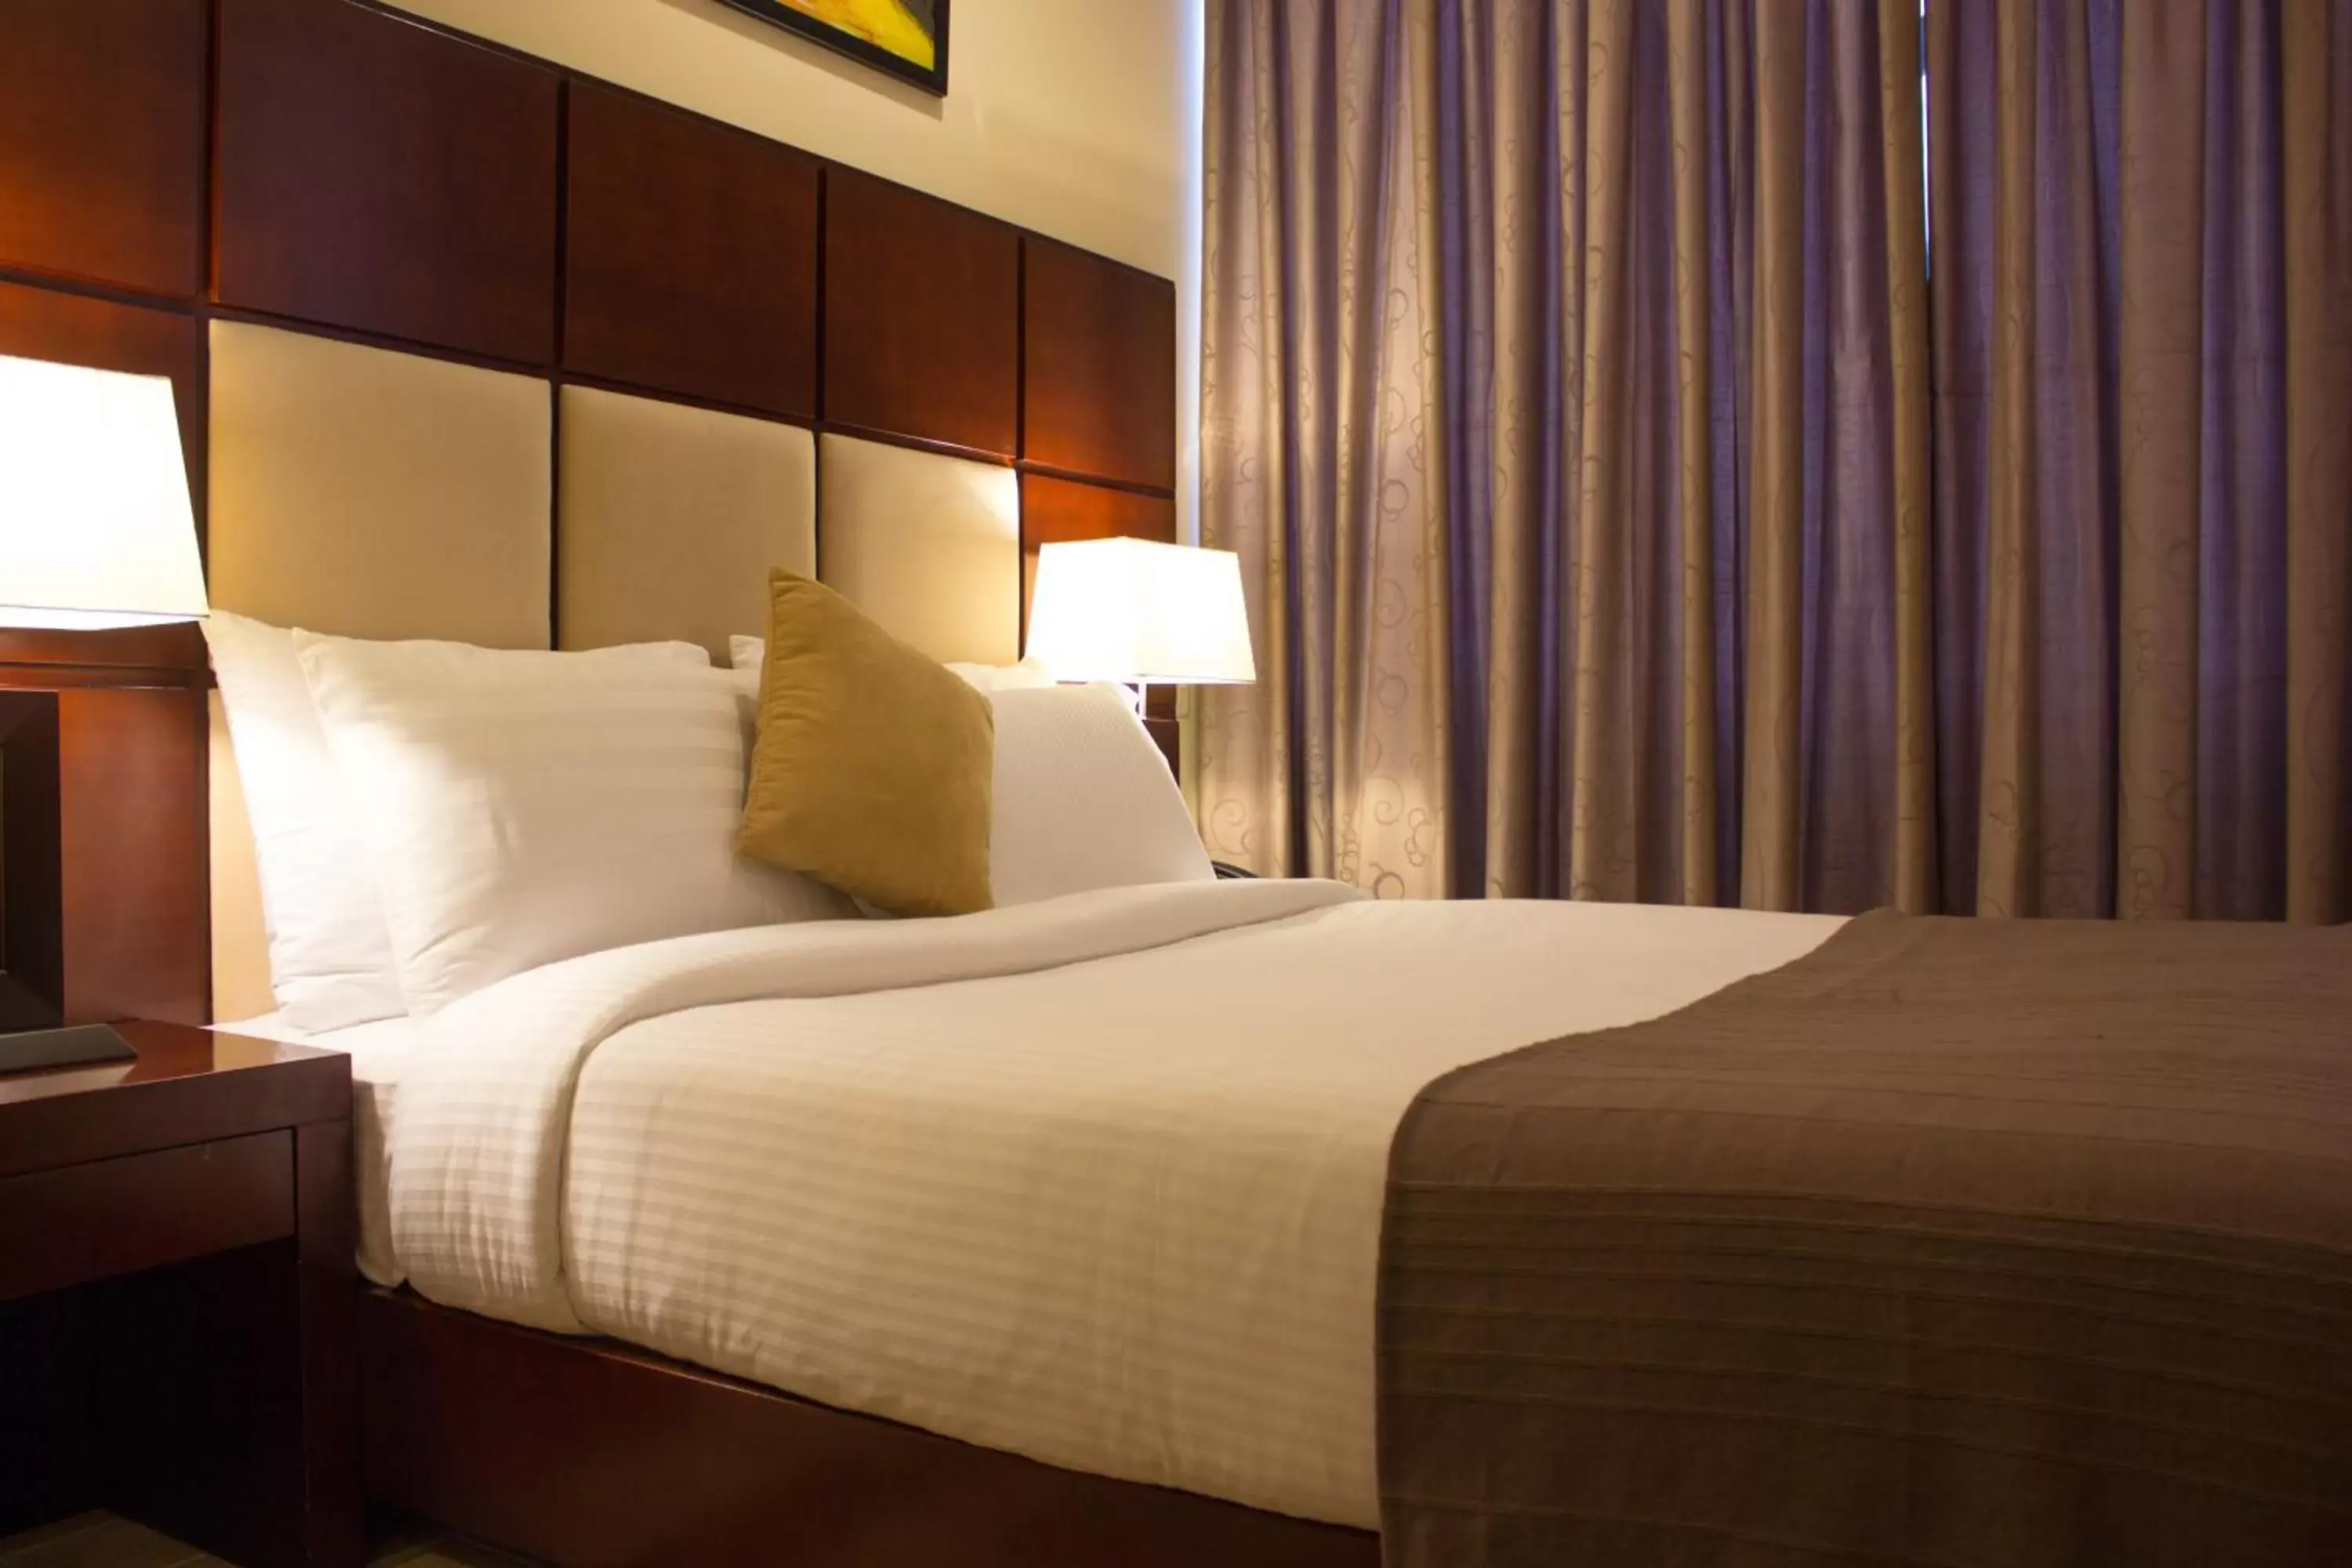 Bed, Room Photo in Seashells Millennium Hotel